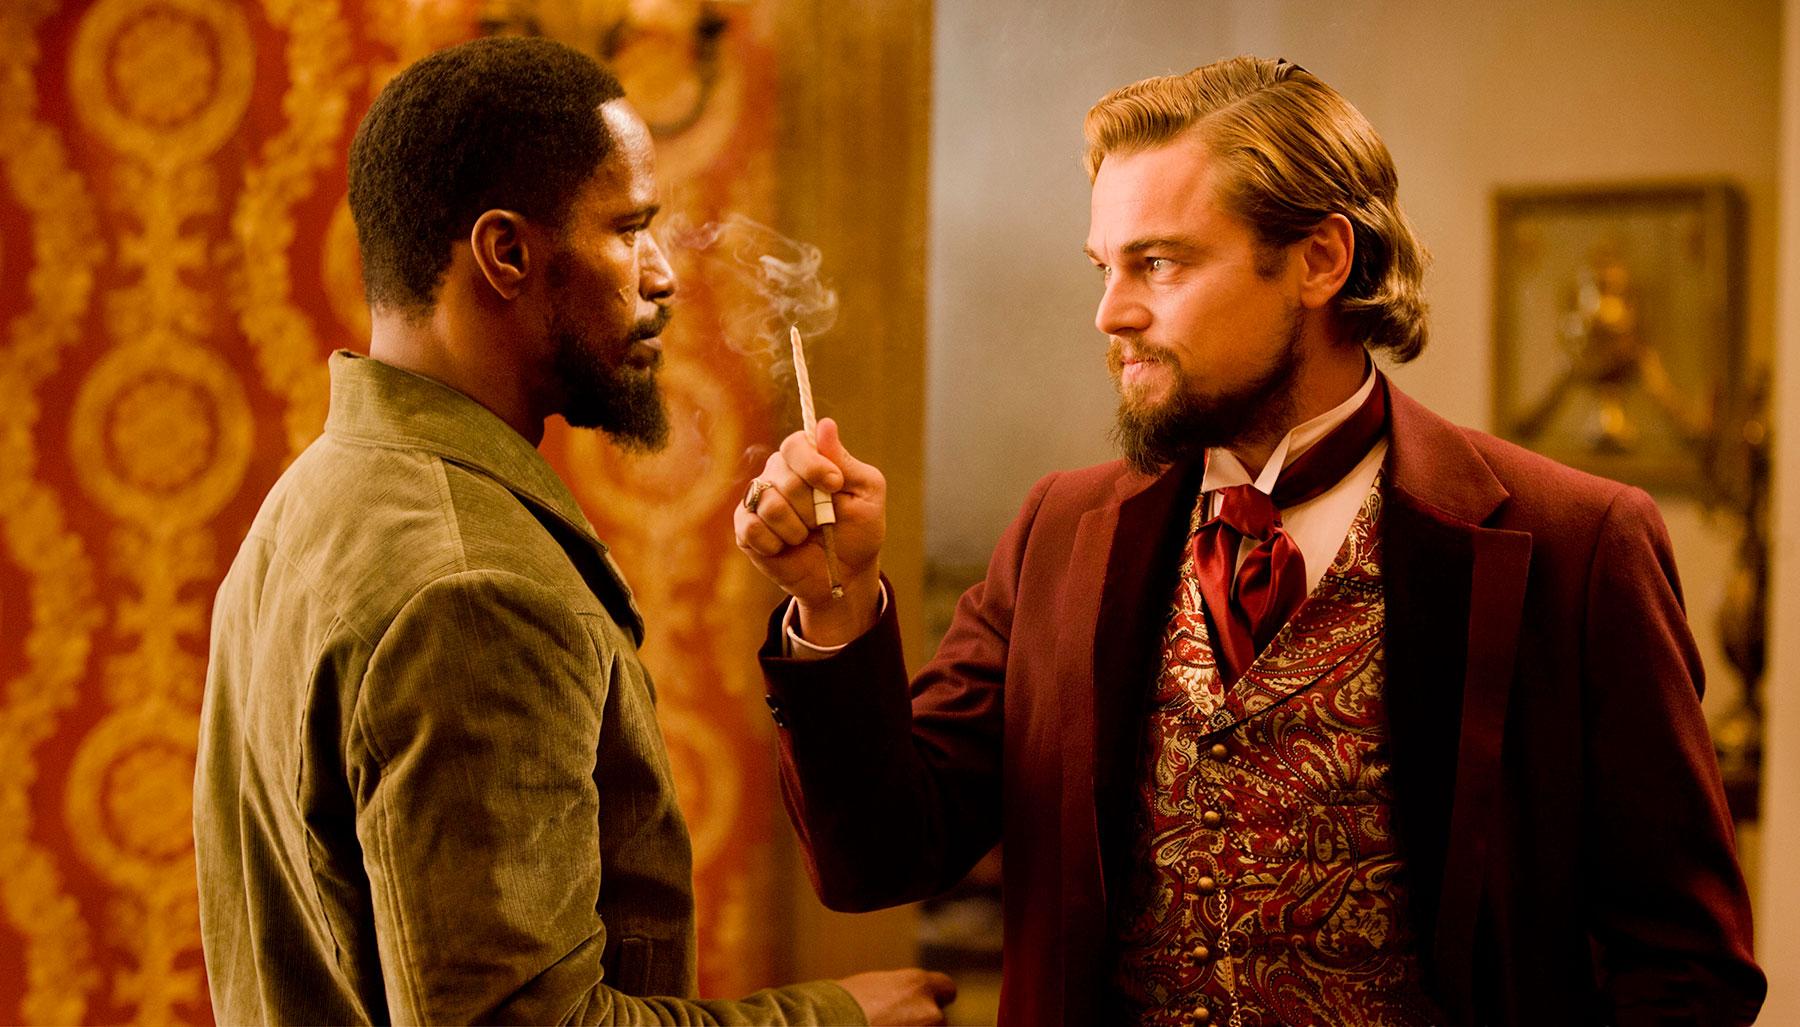 Jamie Foxx och Leonardo DiCaprio i Tarantinos film ”Django unchained”.